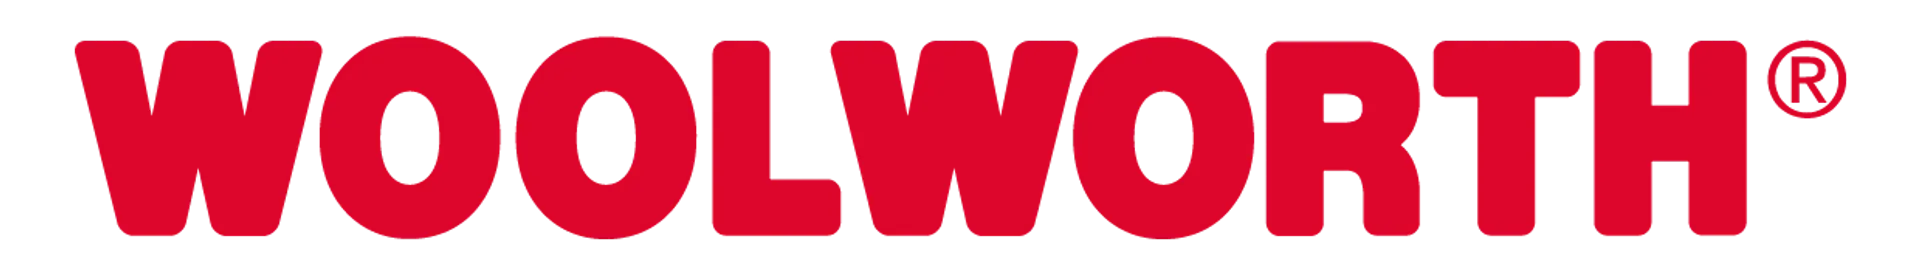 WOOLWORTH logo